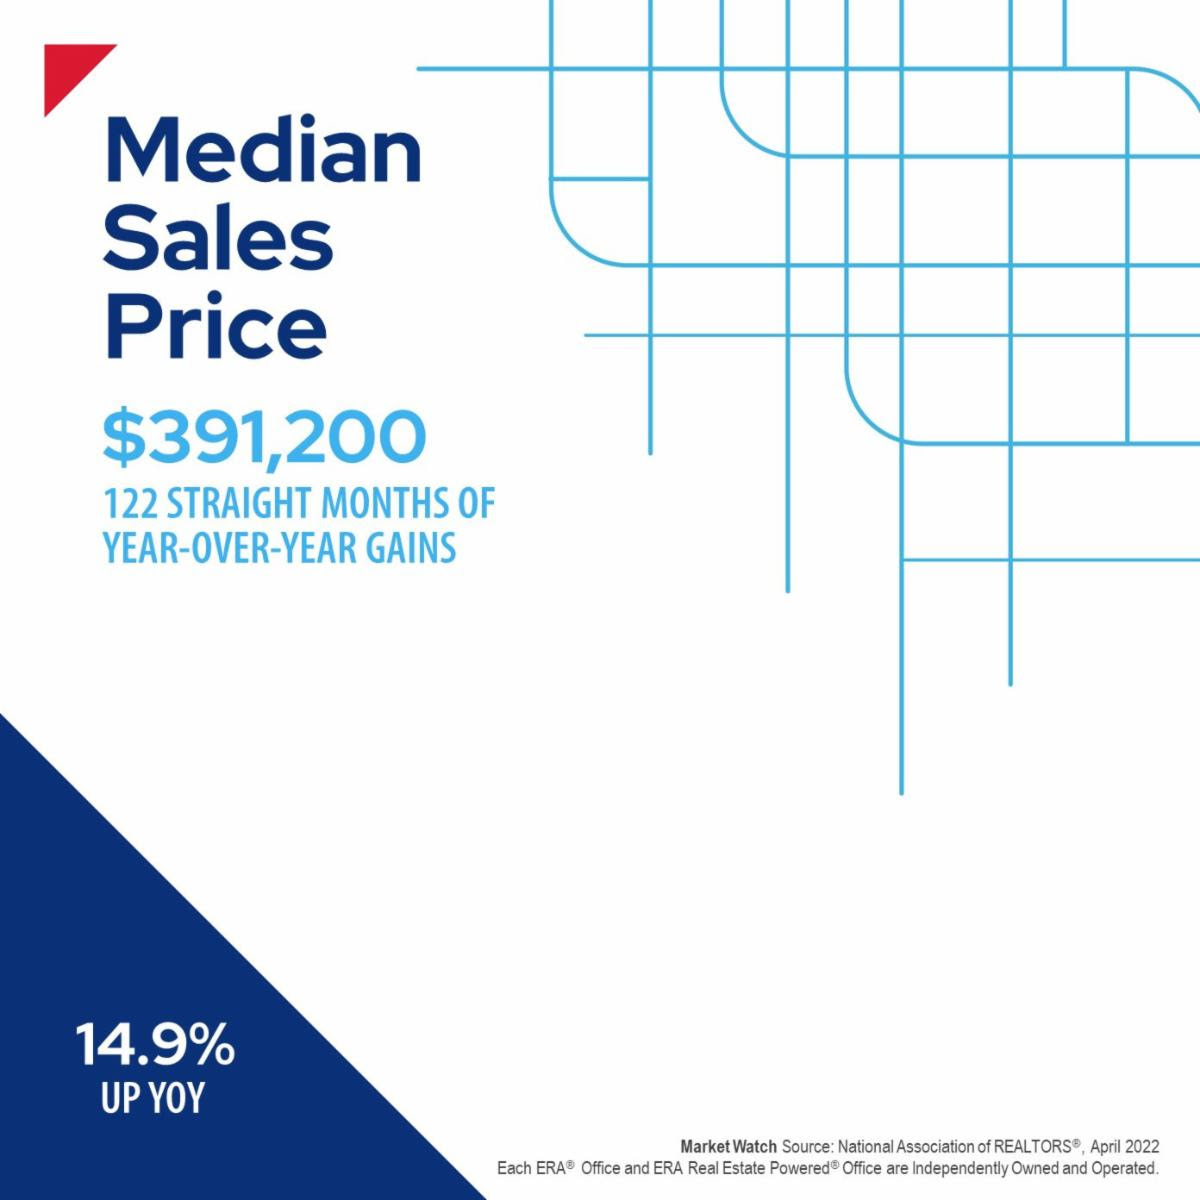 Median Sales Price Central Florida